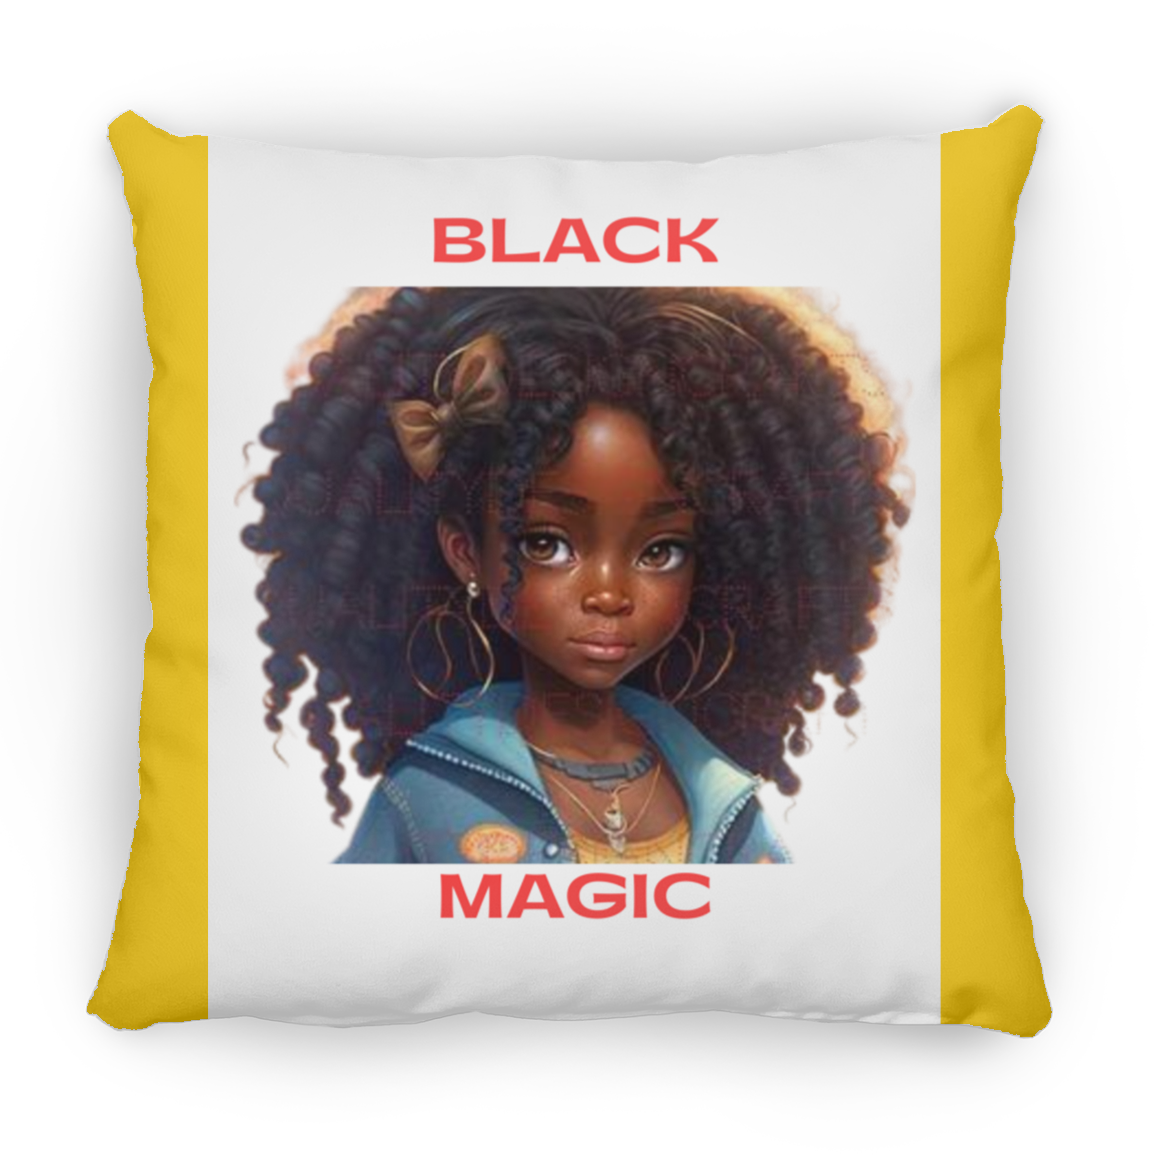 Black Girl Magic Large Square Pillow, Kids Beautiful Black Girl Magic Melanin Black Woman, Afro Fashion Girl African American